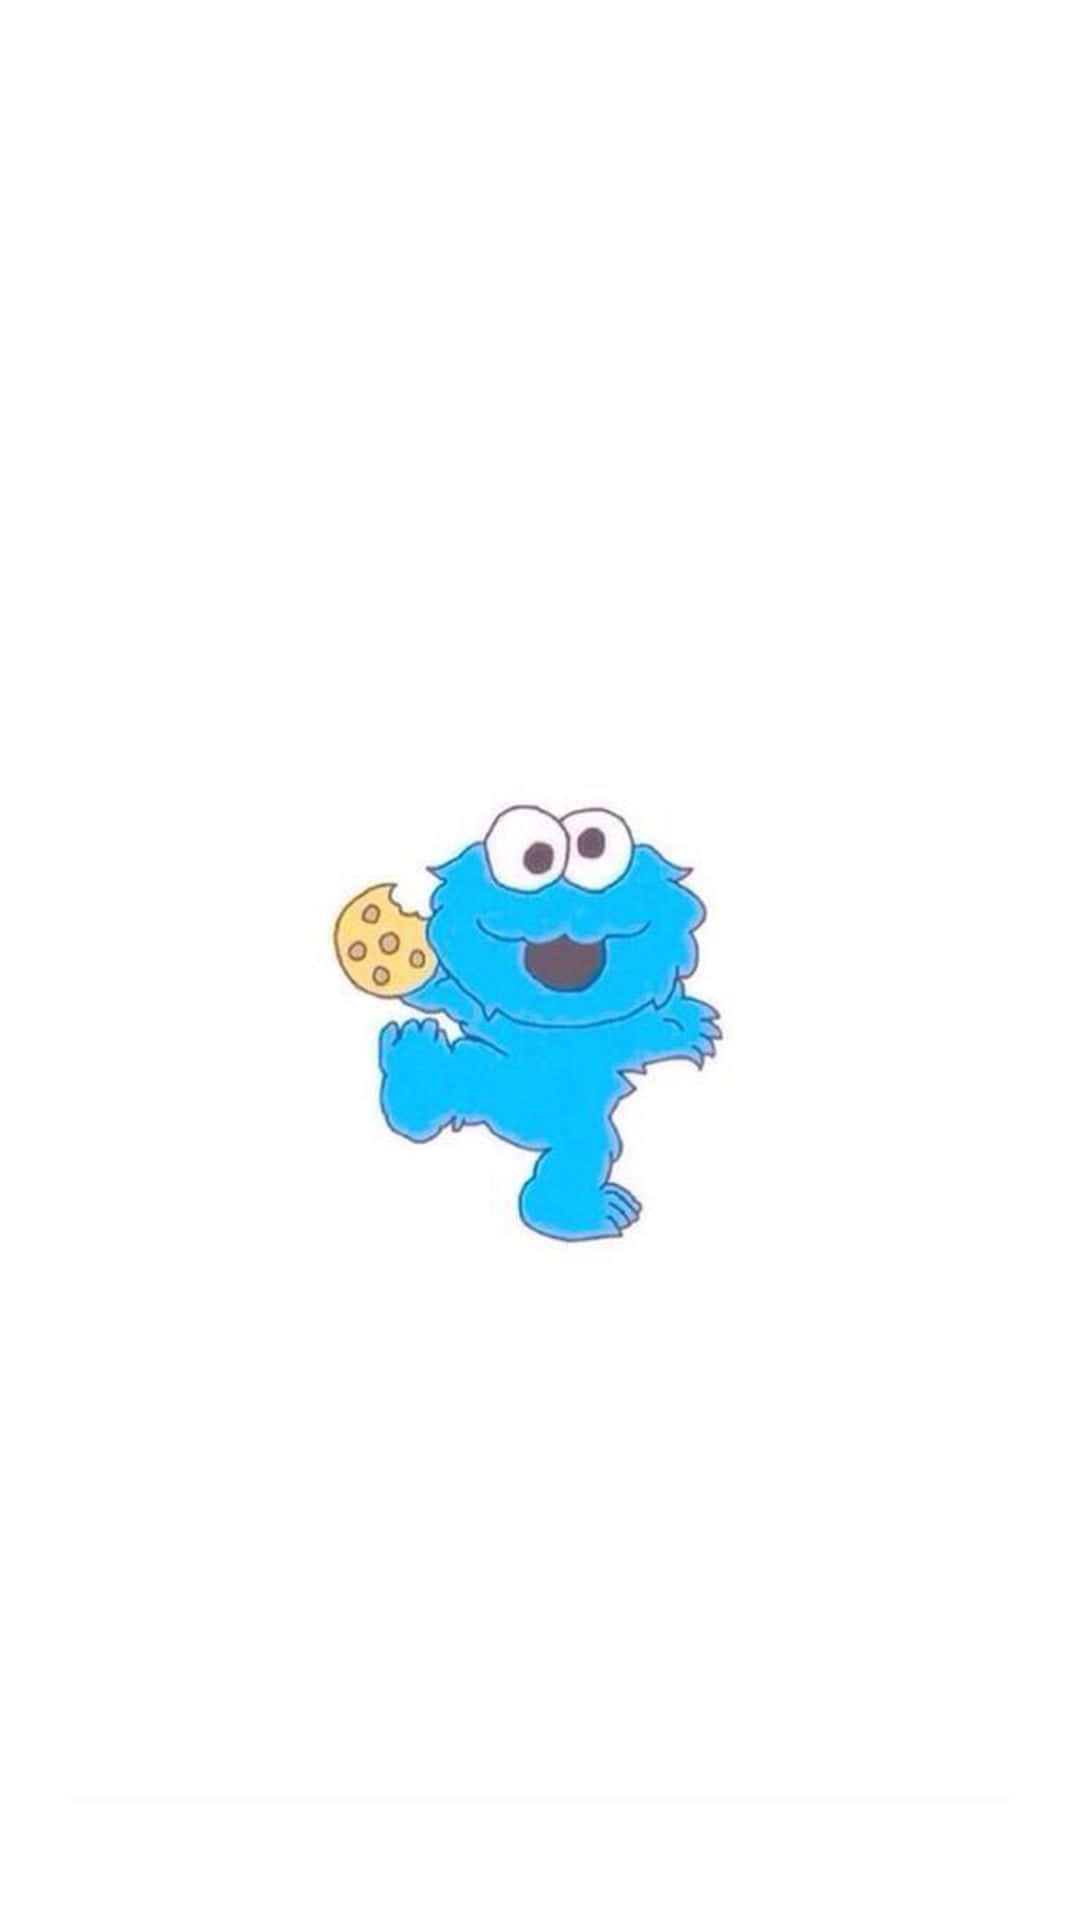 Delightful Cookie Monster enjoying a snack